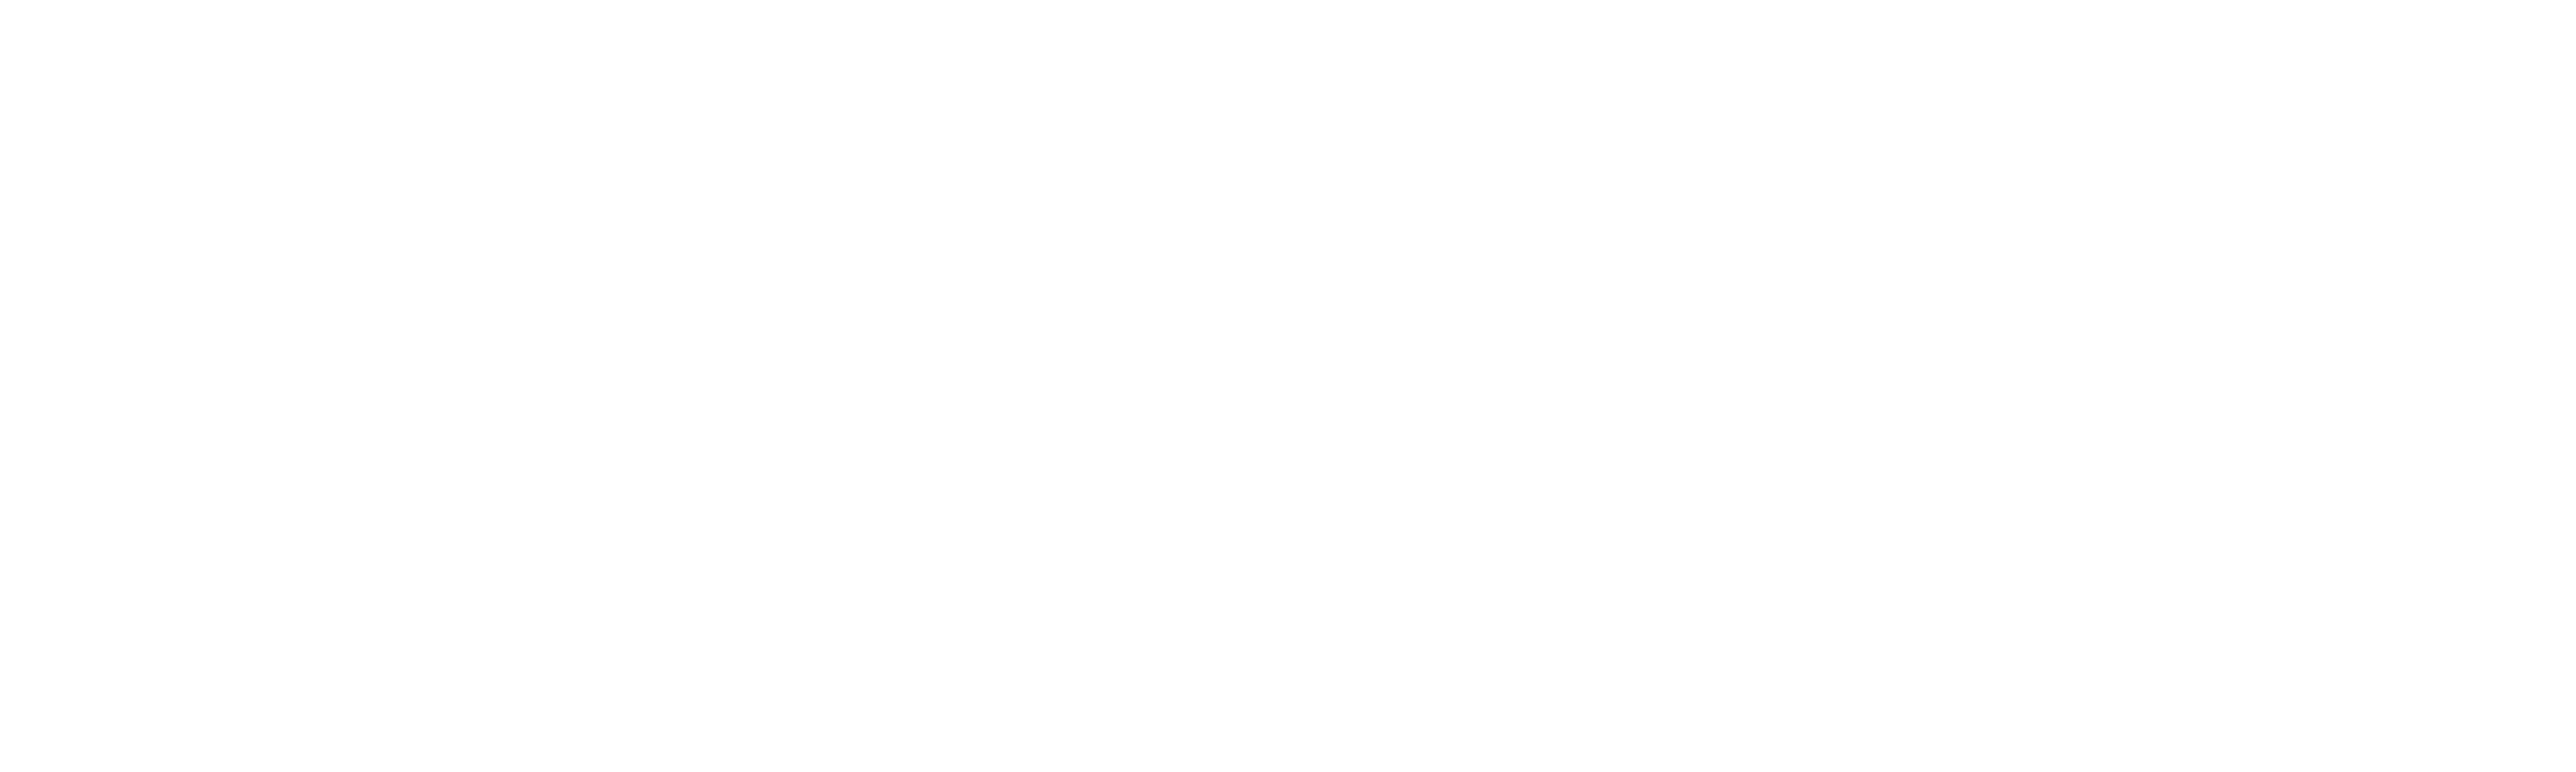 Billy The Kid: New Evidence logo